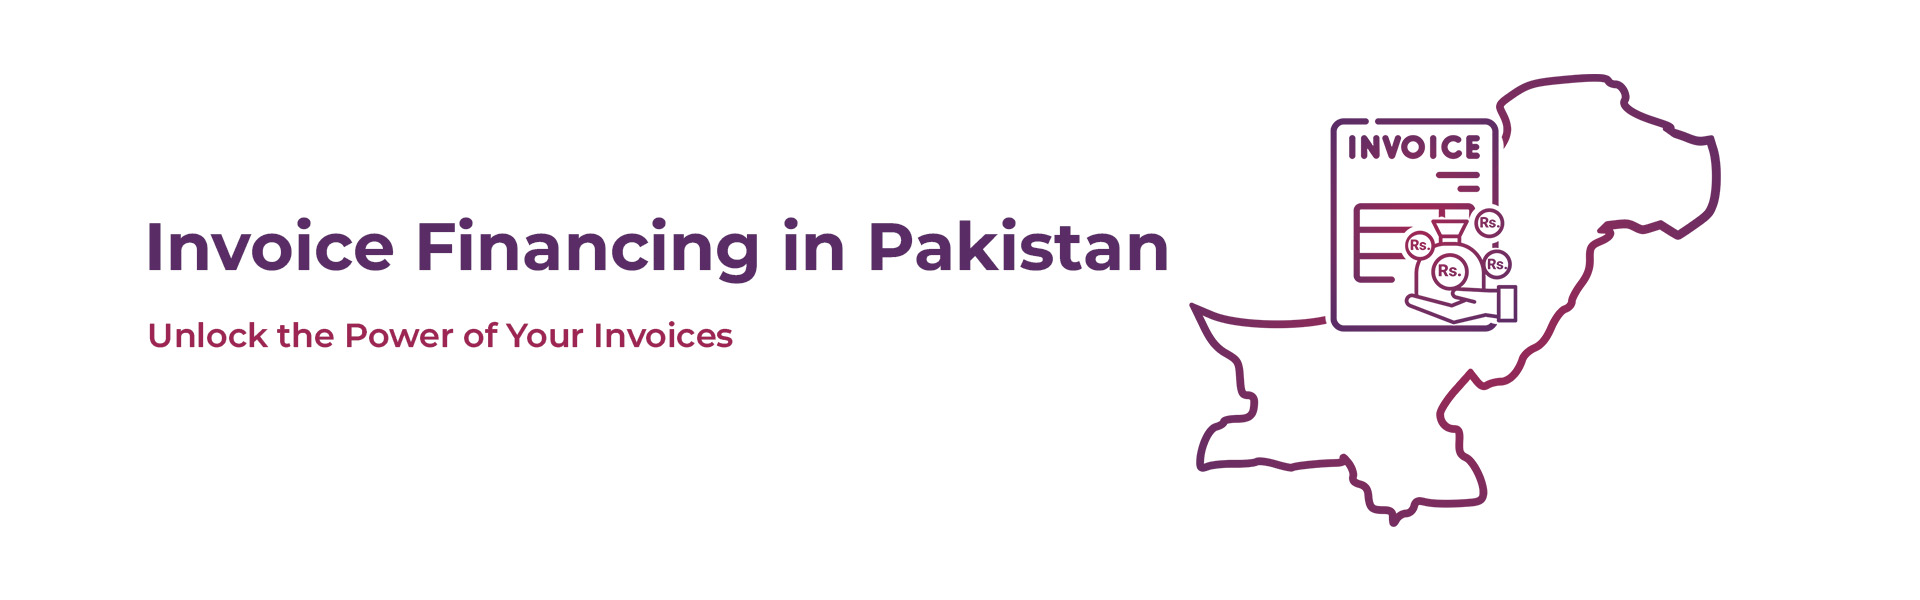 Invoice financing in Pakistan Header White BG